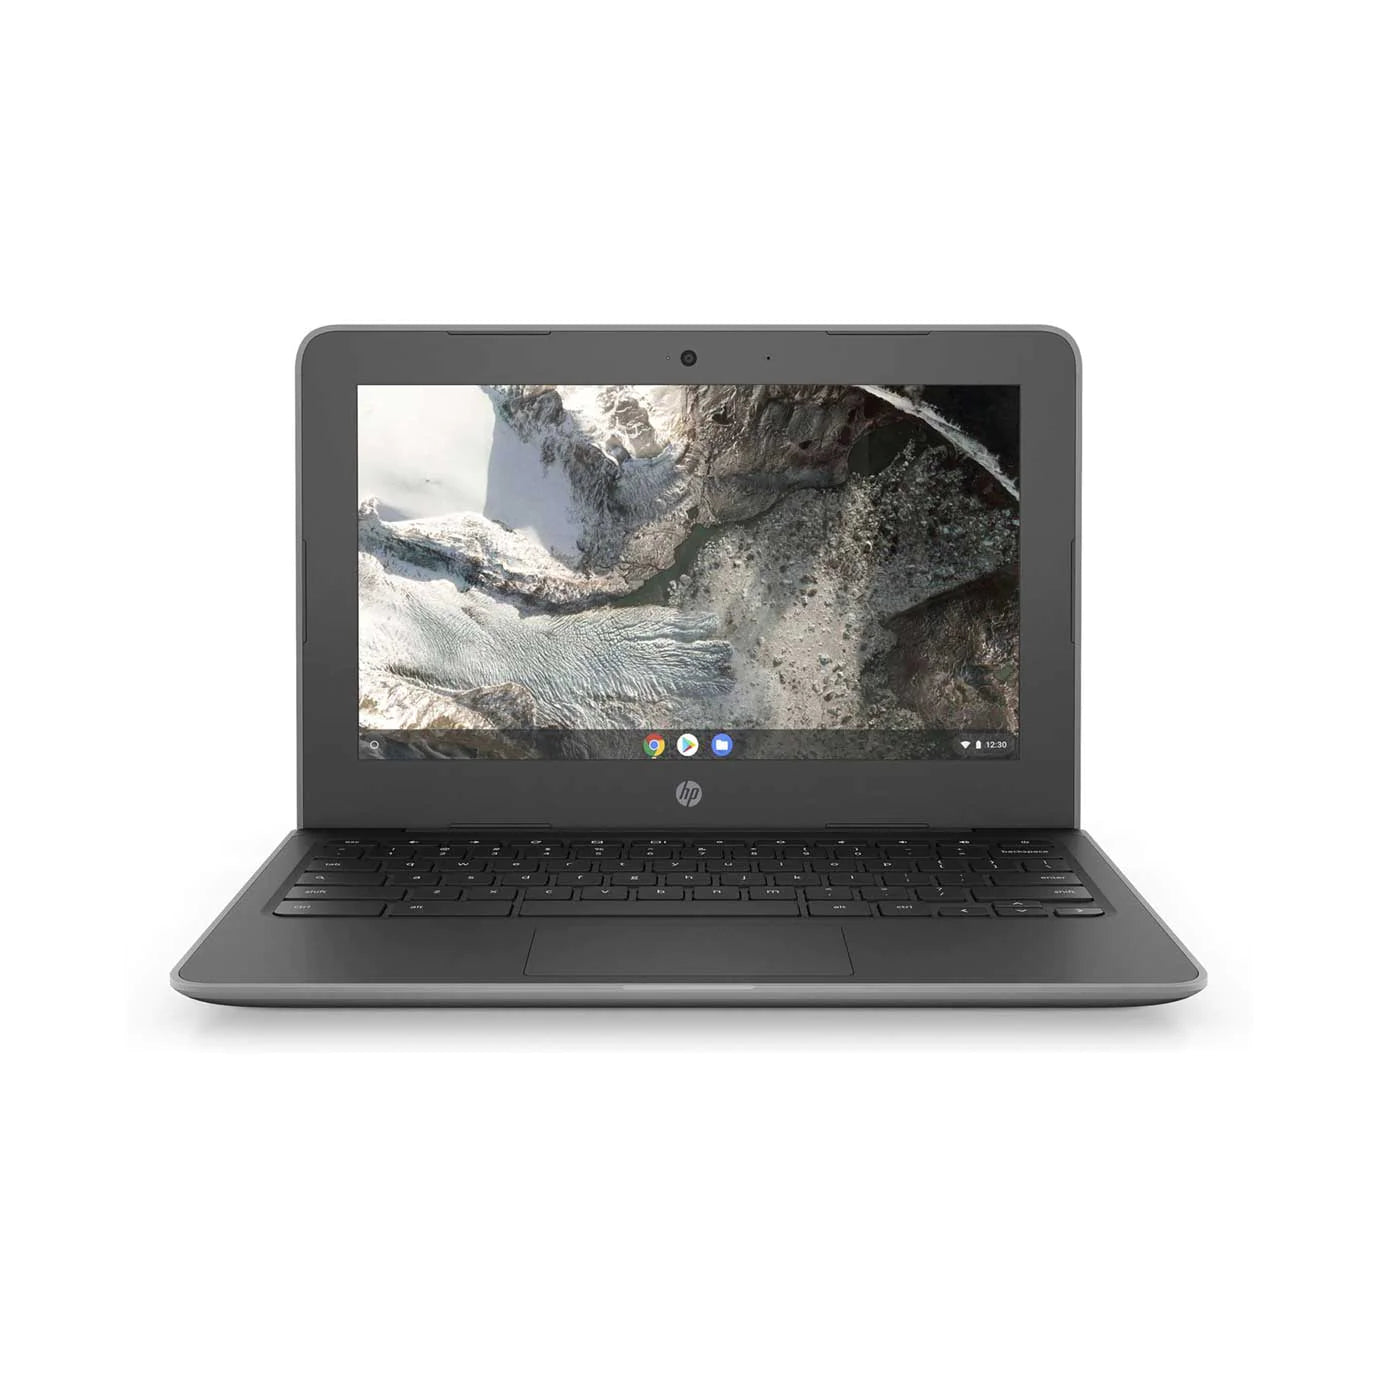 HP 11 G7 Chromebook, N4000, 4GB, 16GB eMMC - Refurbished Excellent Condition